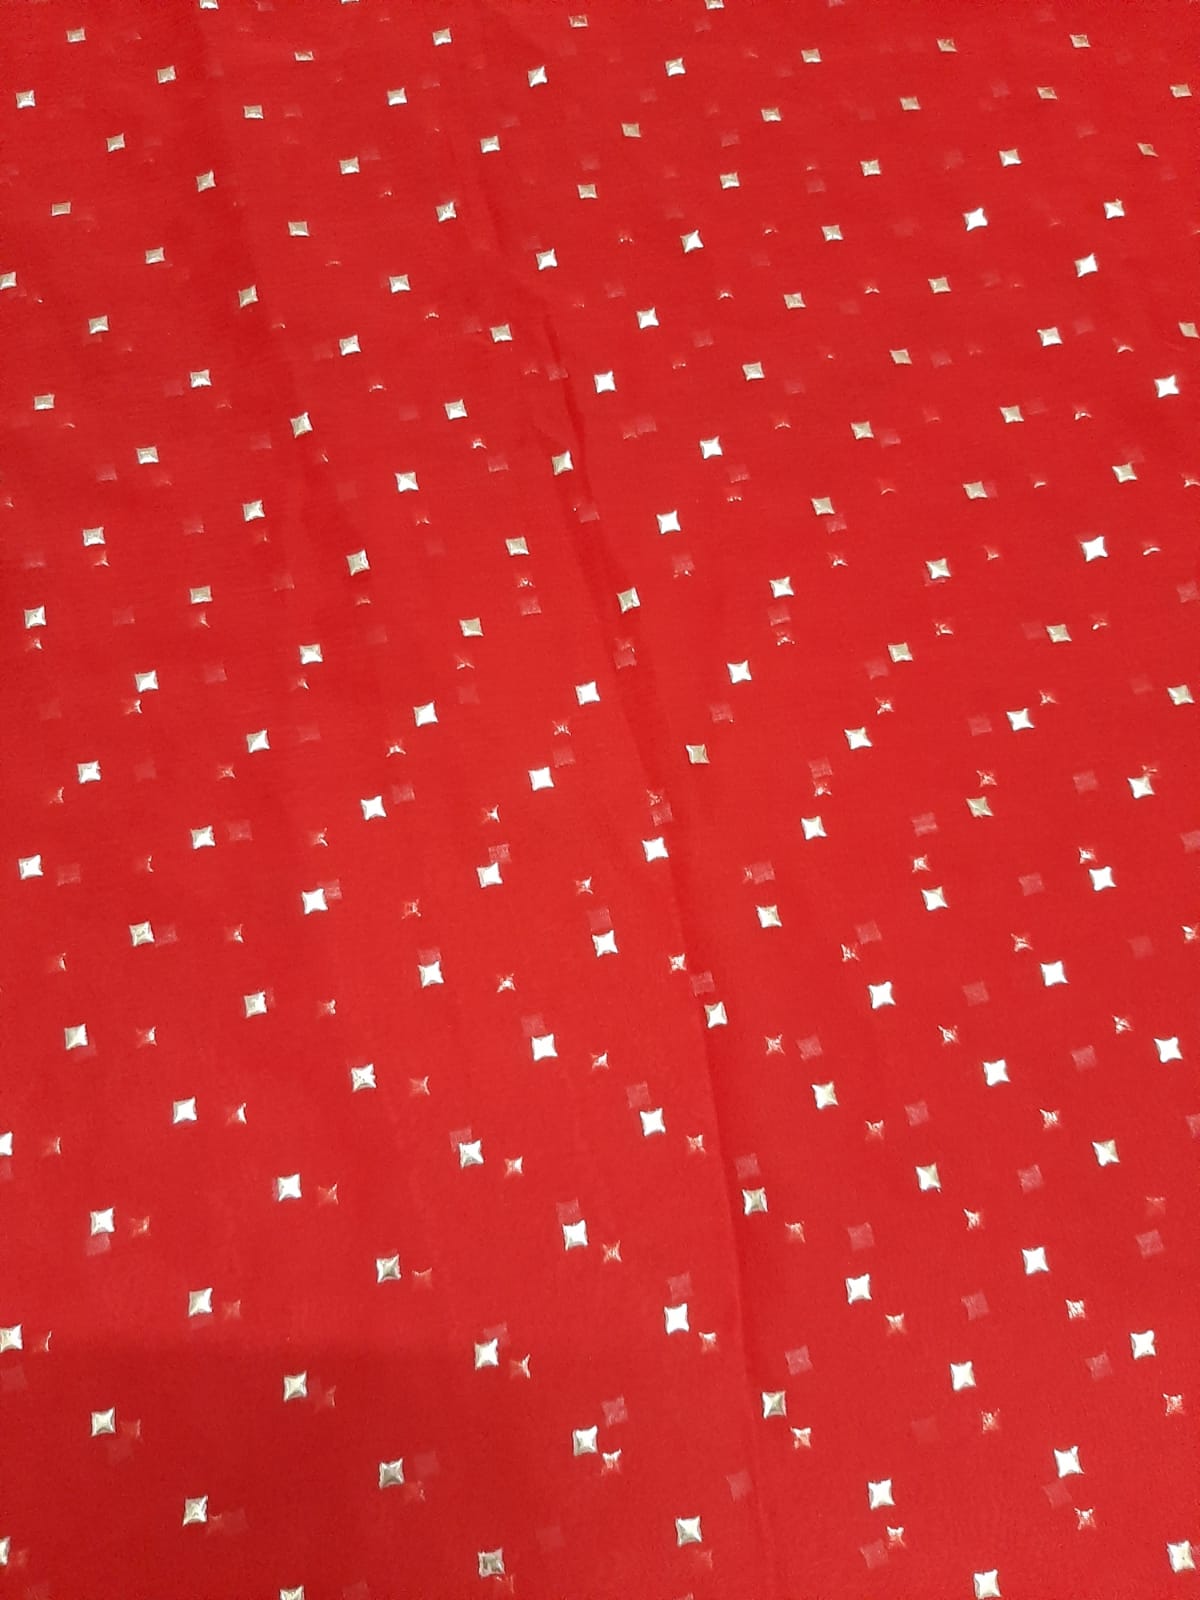 Red Star Print Chiffon Fabric